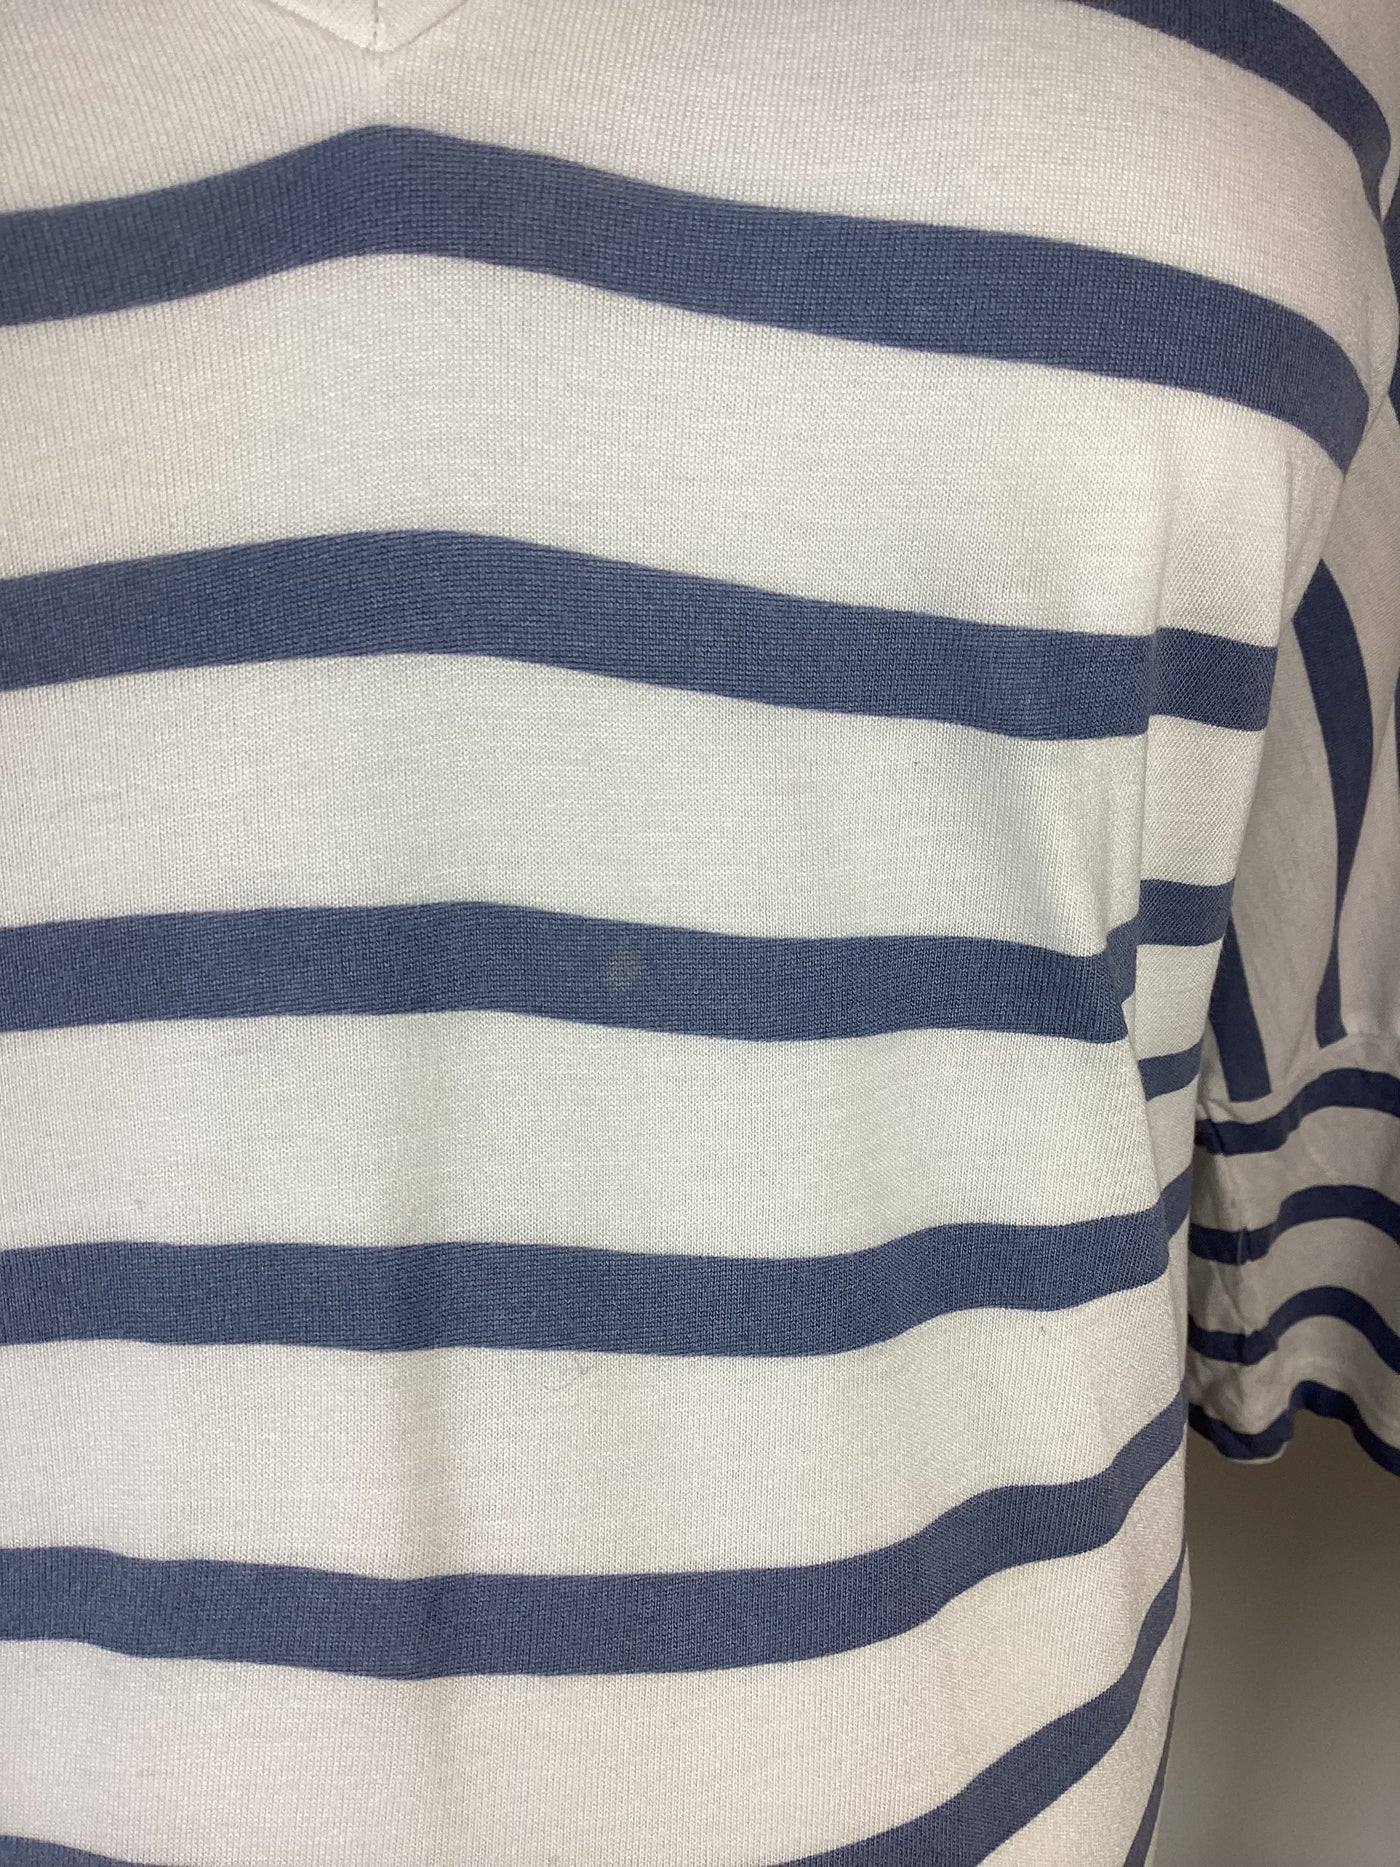 Asos Maternity white & blue stripe layered nursing top - Size 12